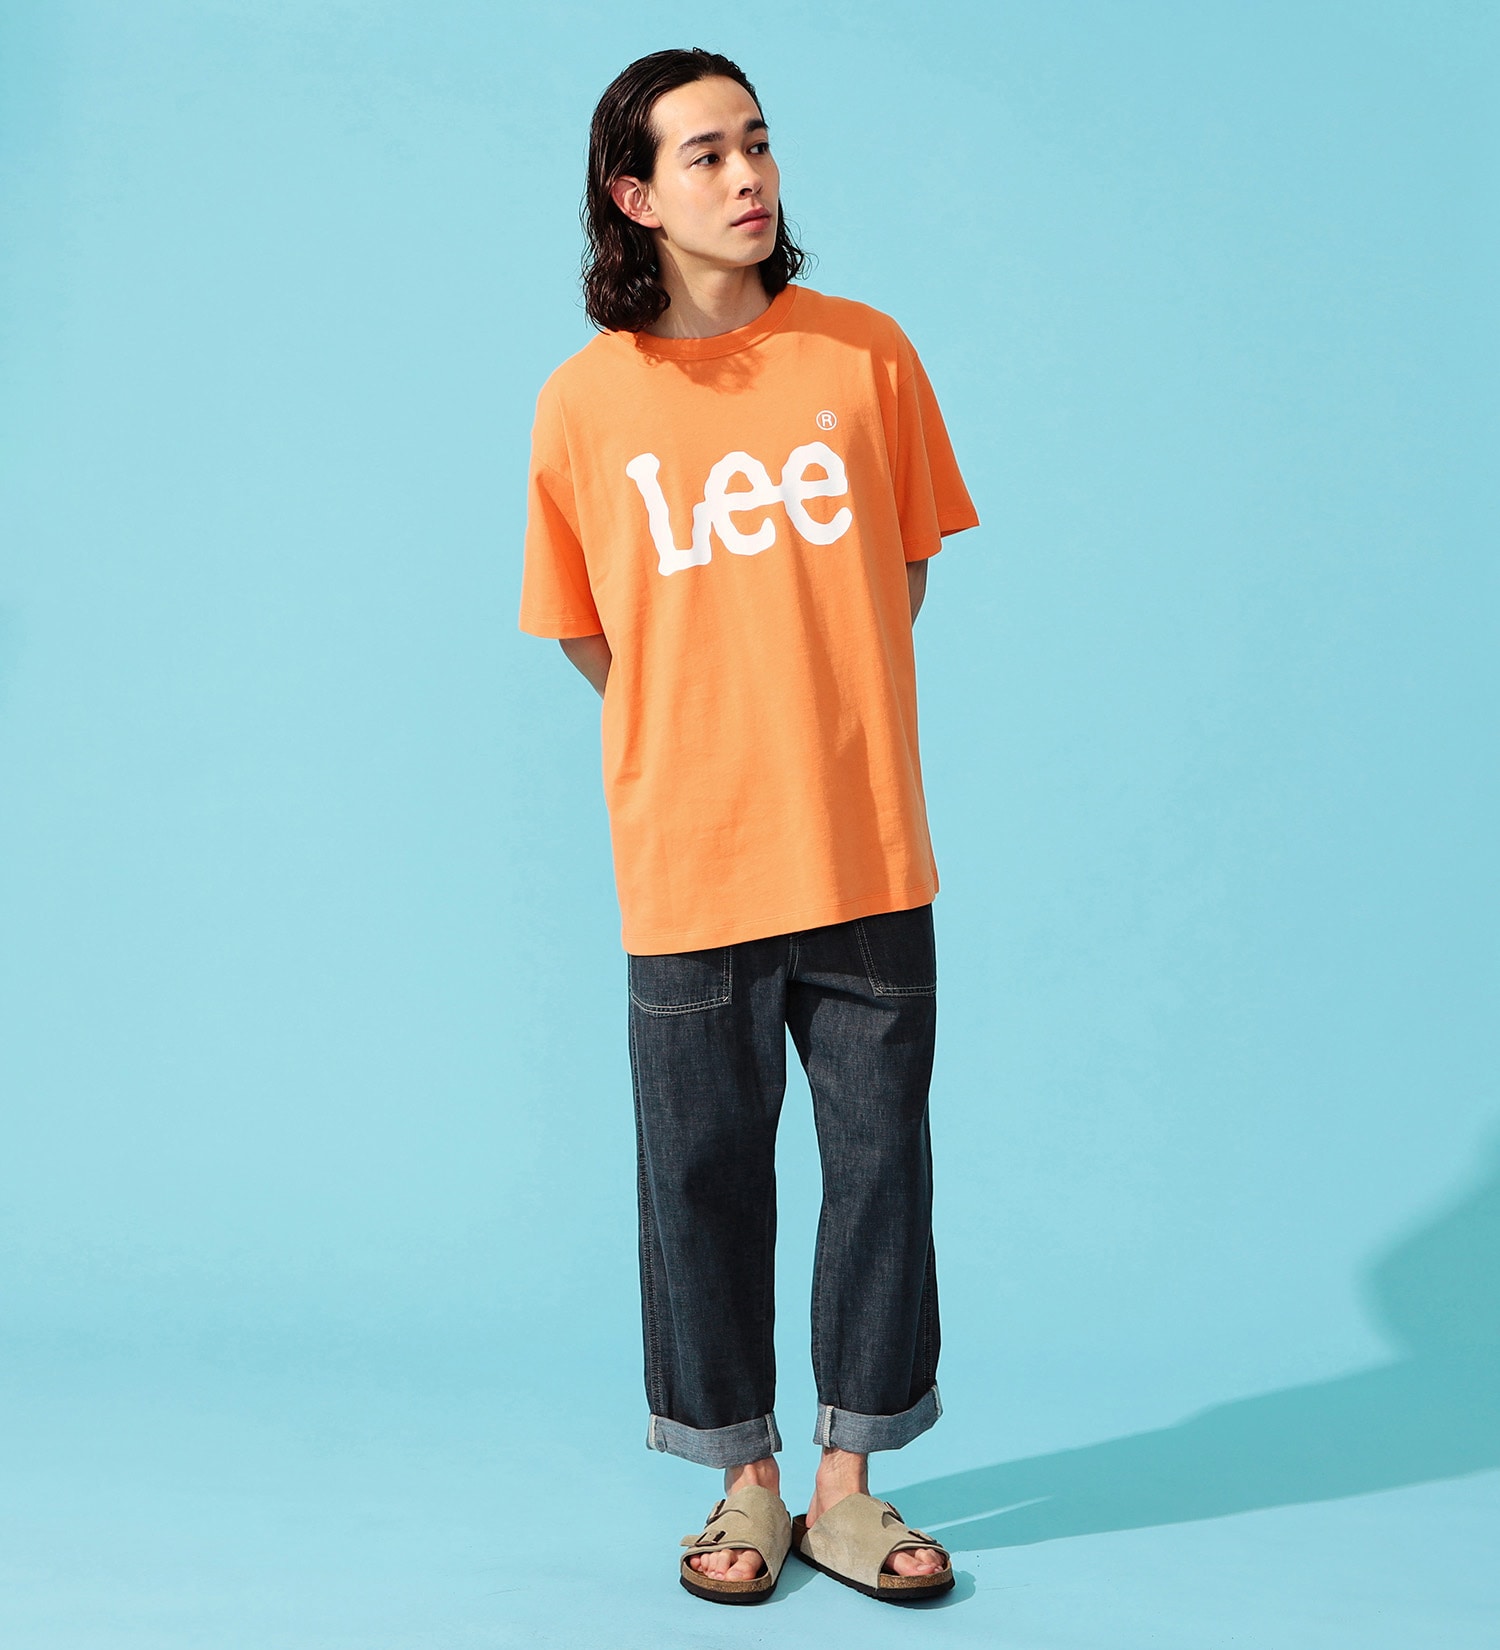 Lee(リー)の【涼】快適素材 ベーカーイージーパンツ|パンツ/デニムパンツ/メンズ|ブラックデニム